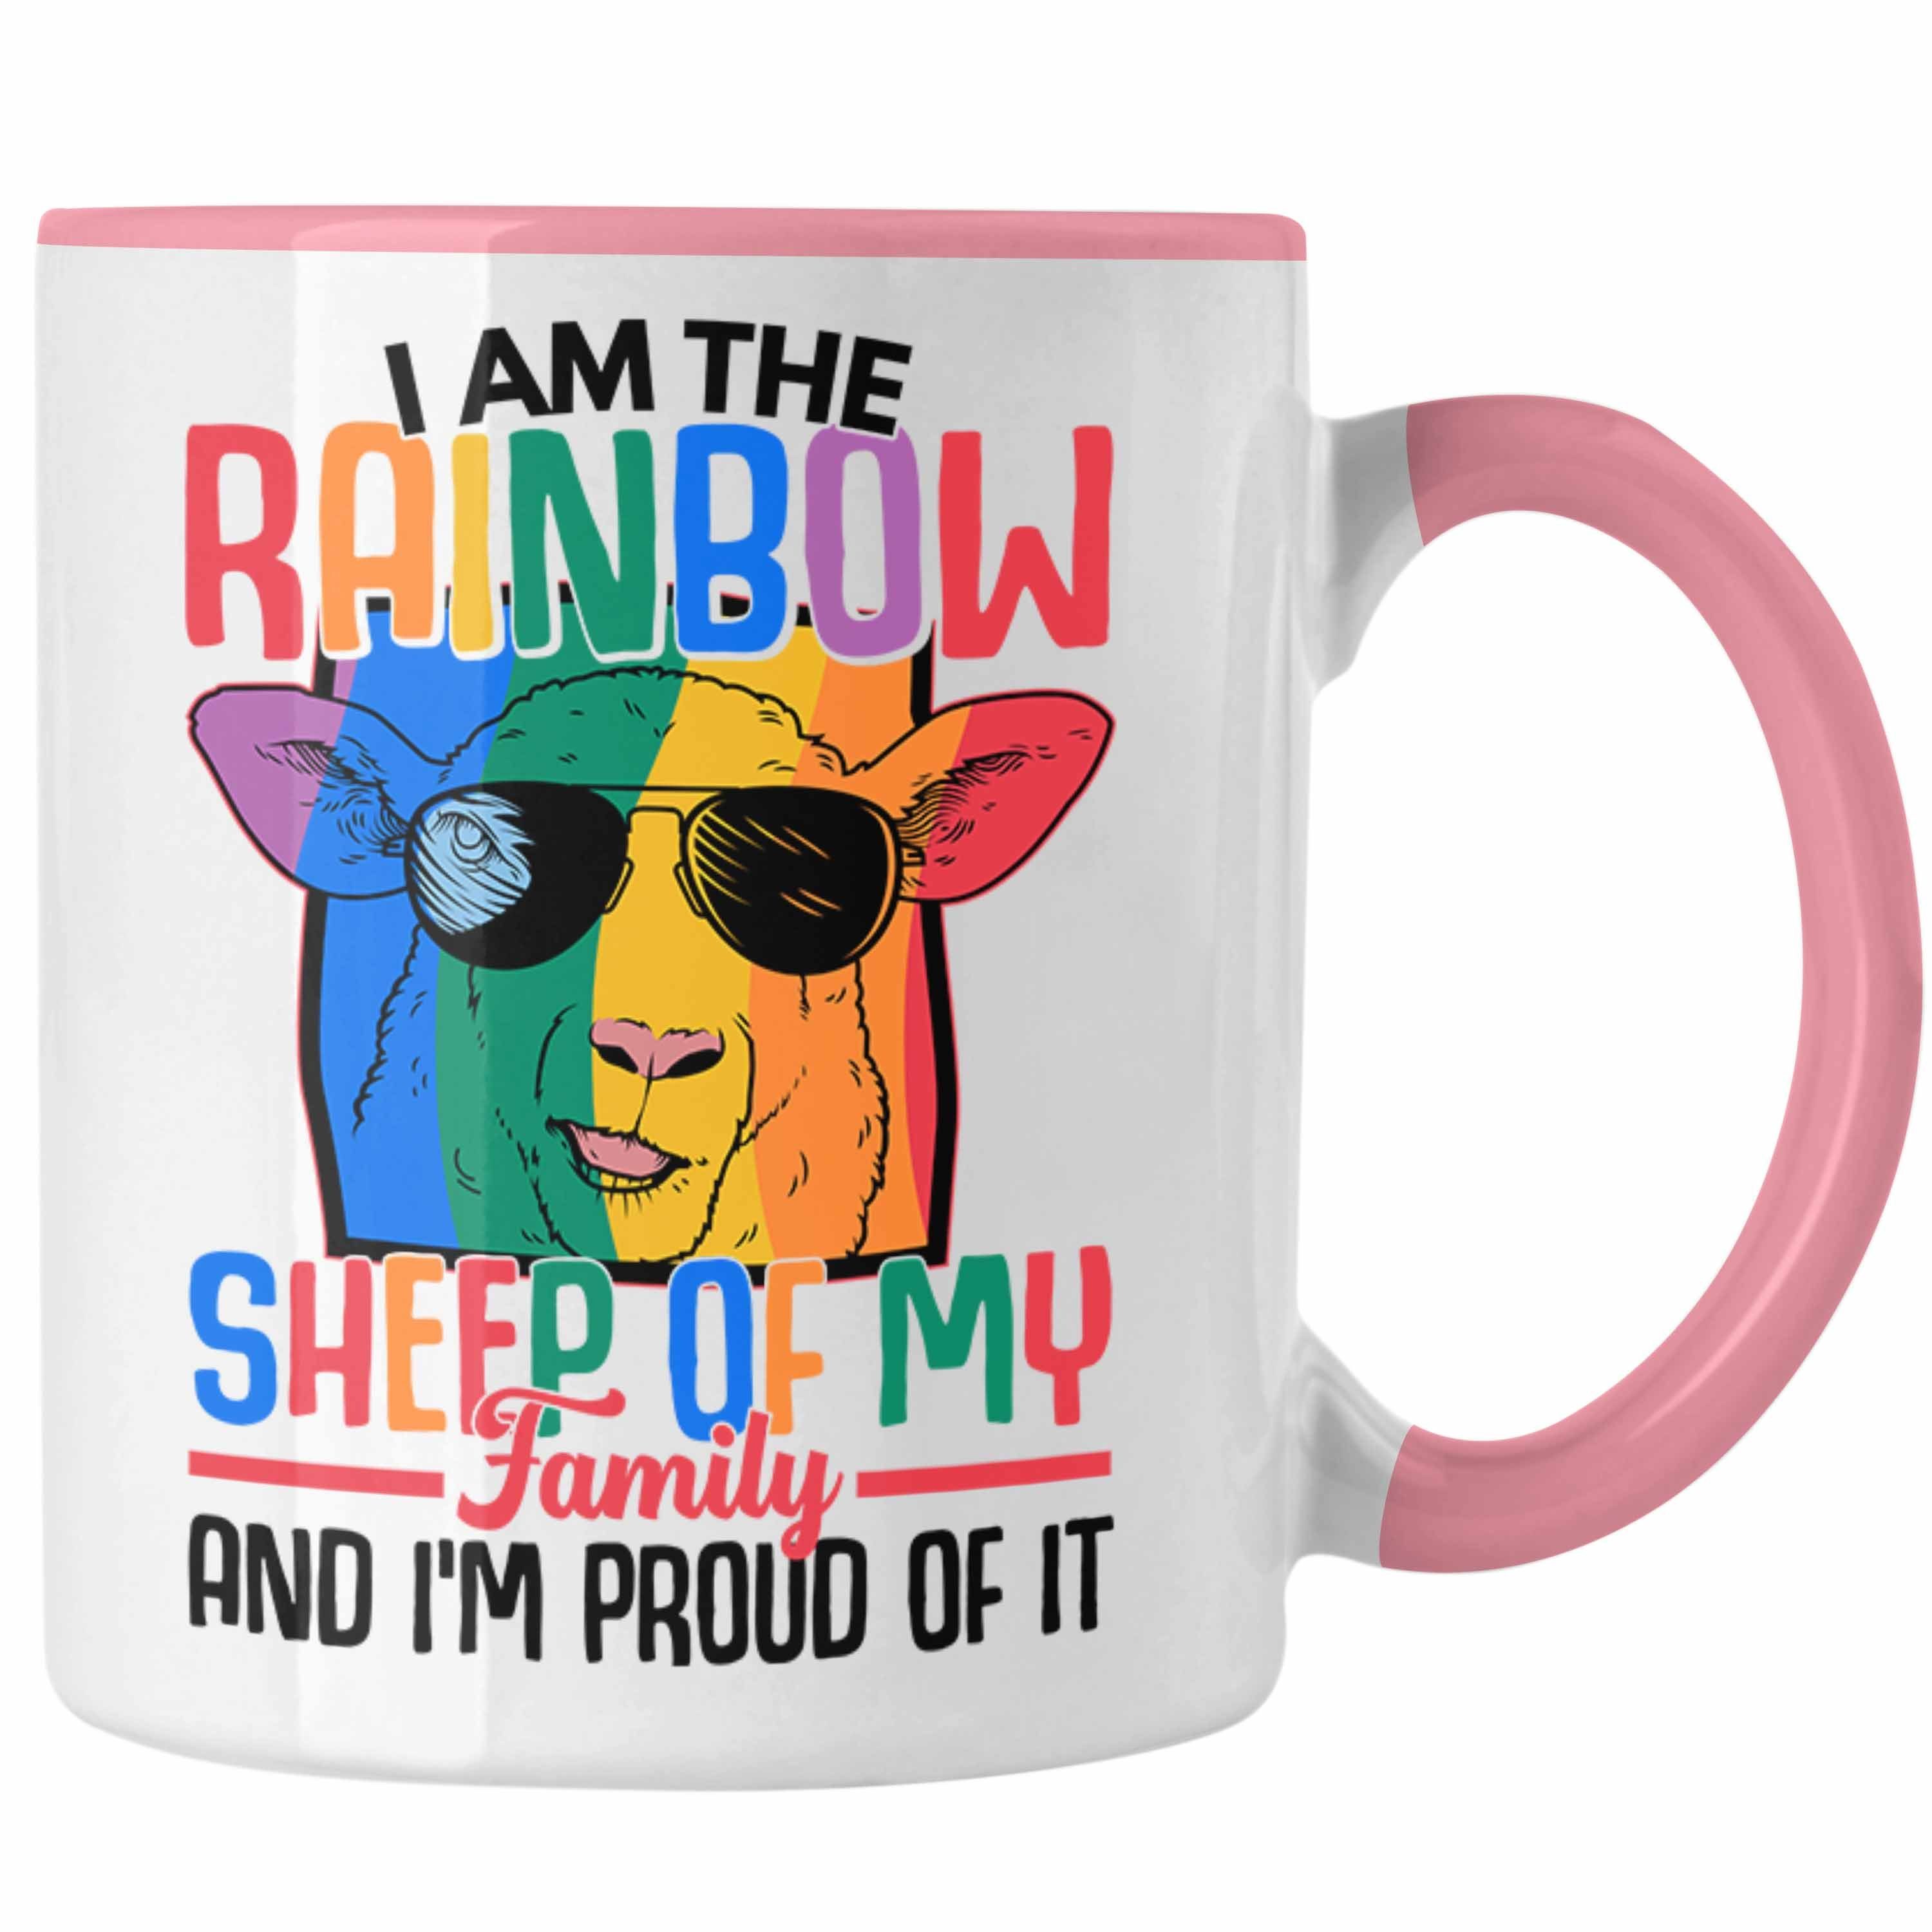 Der Tasse Schaaf Trendation Lesben für Tasse Regenbogen Regenbogen LGBT - Rosa Familie Grafik In Lustige Transgender Schwule Trendation Geschenk